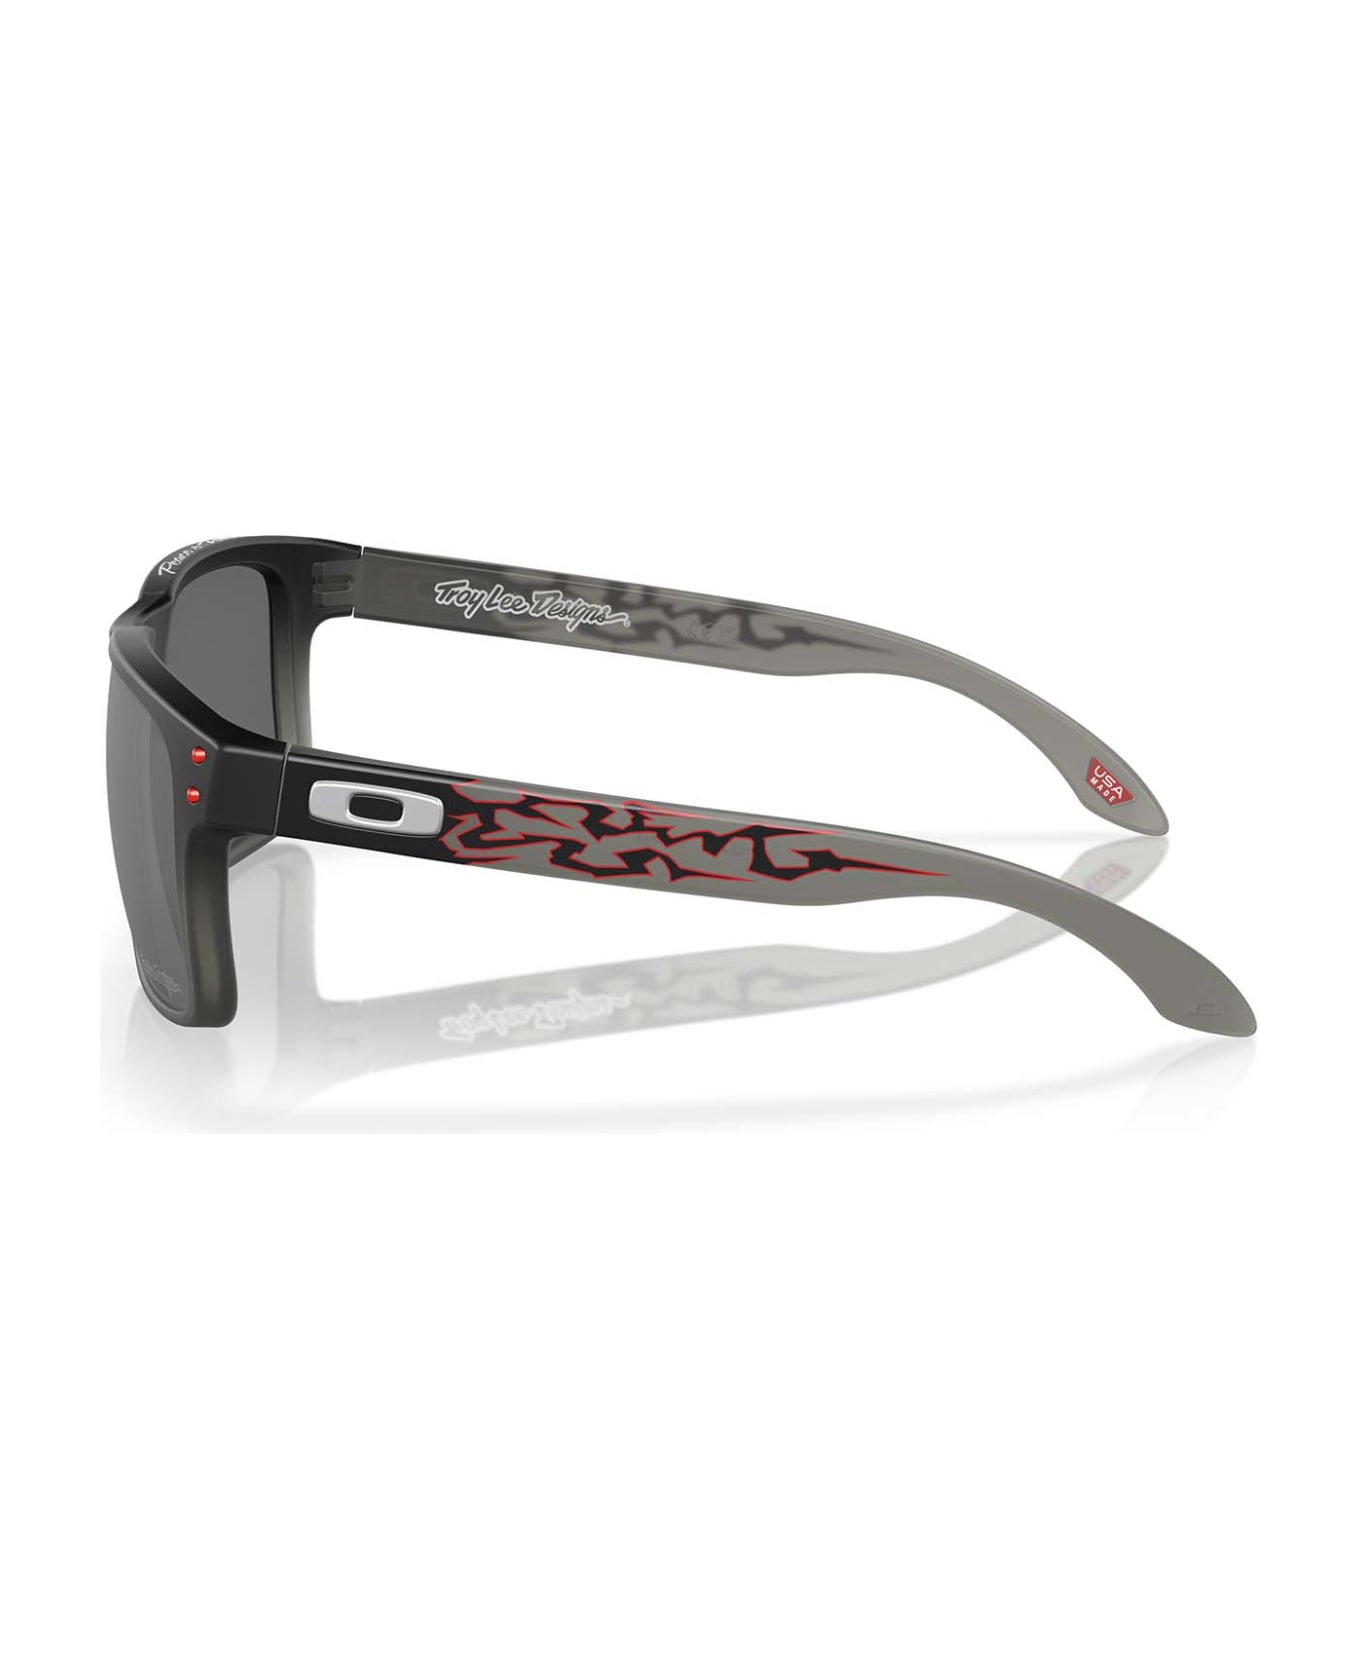 Oakley Oo9102 Troy Lee Designs Black Fade Sunglasses - Troy Lee Designs Black Fade